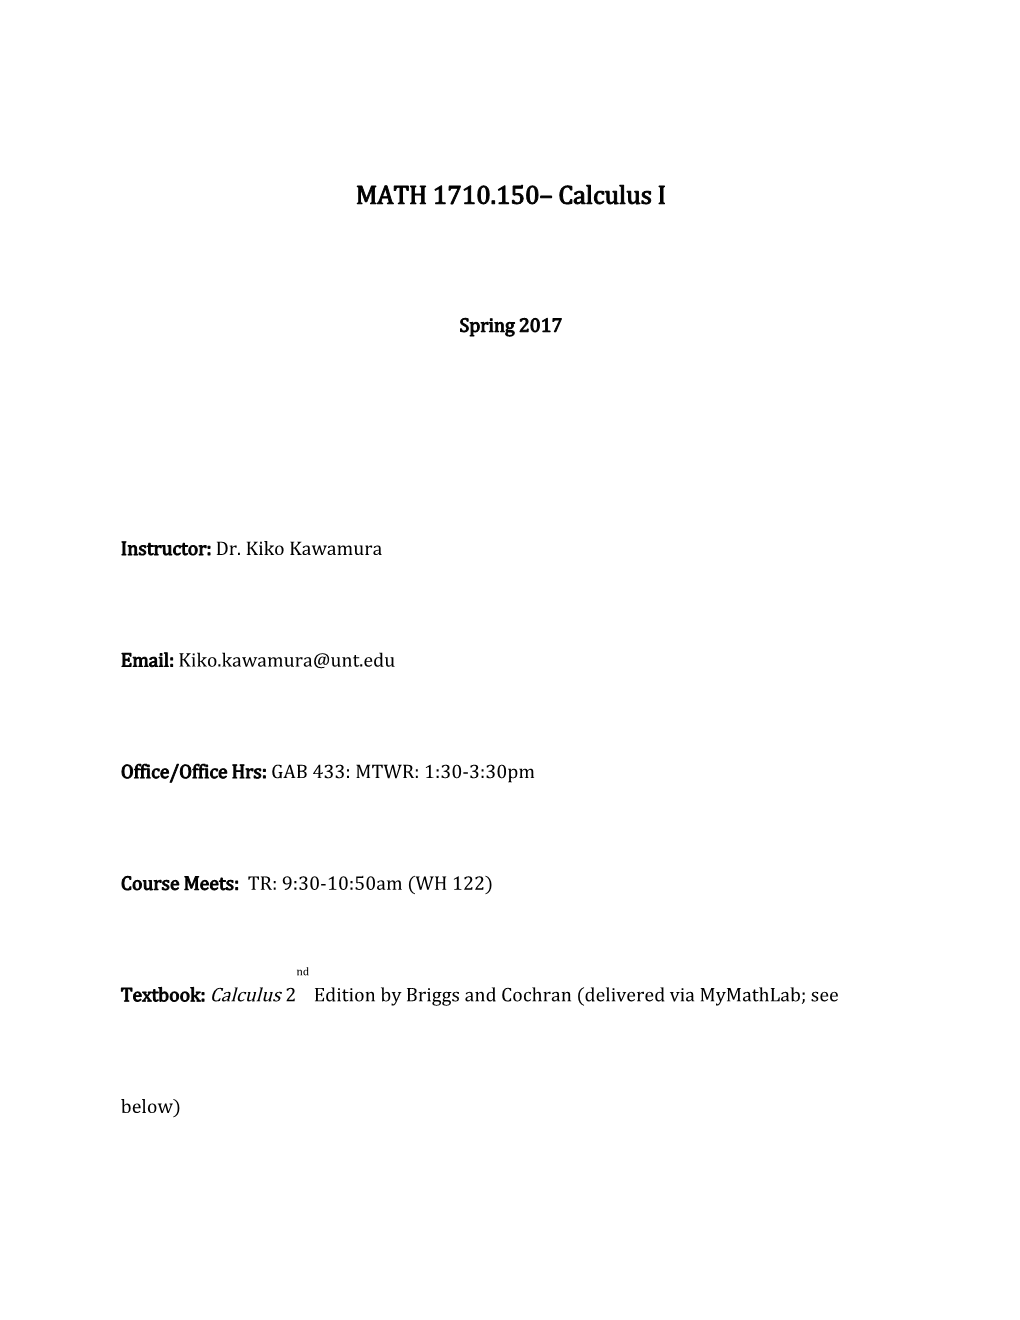 MATH 1710.150 Calculus I